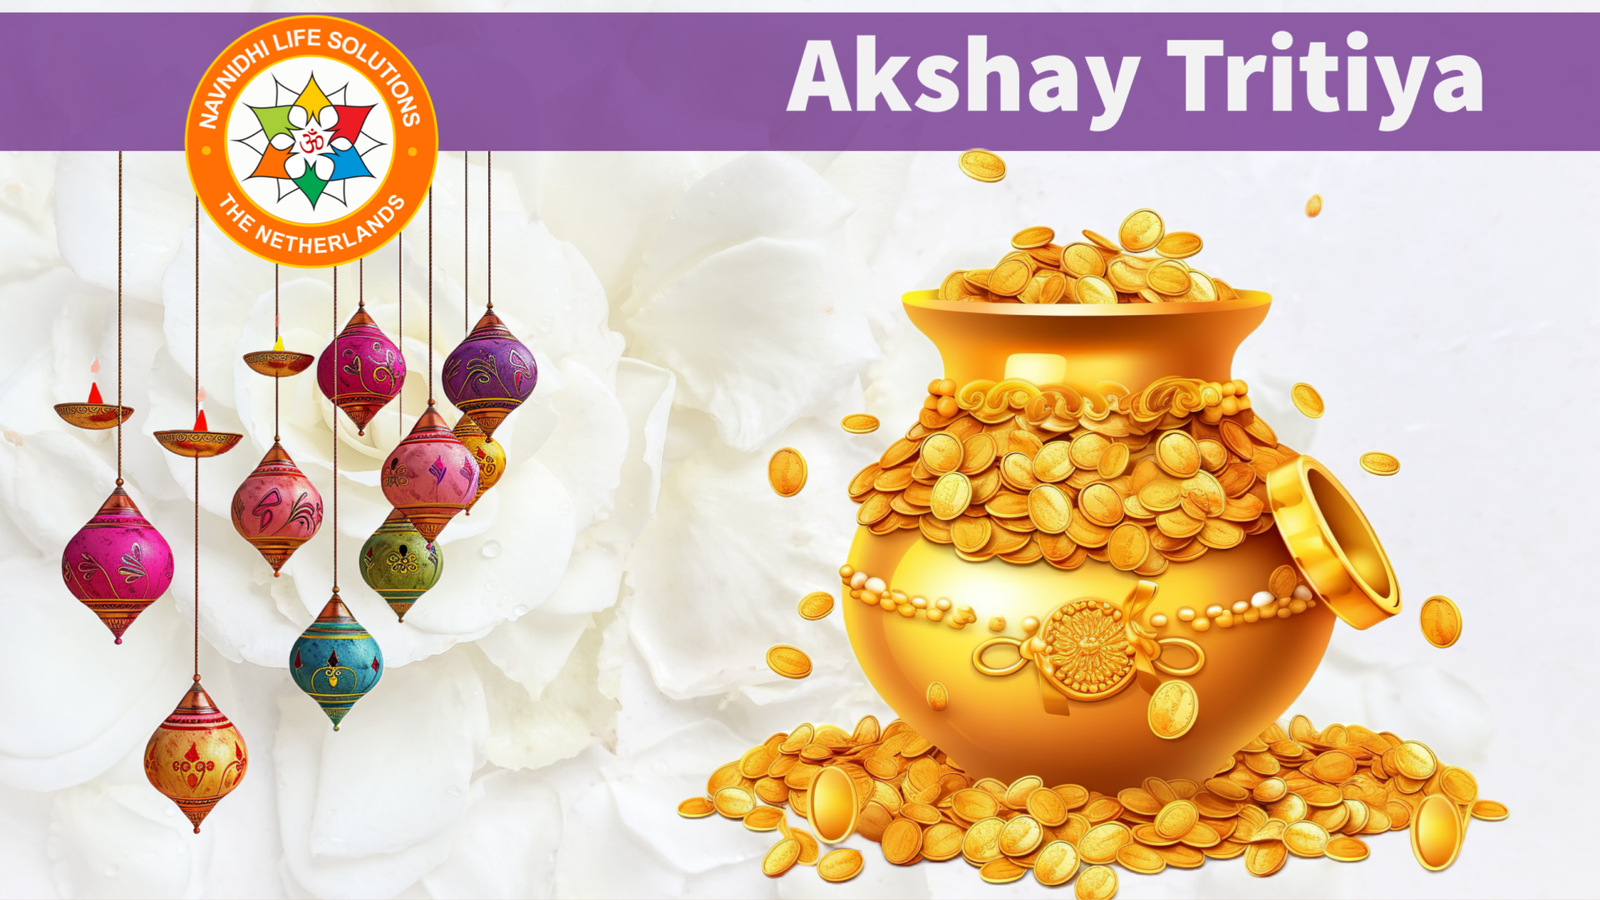 The luxurious ways to achieve Prosperity on Akshay Tritiya